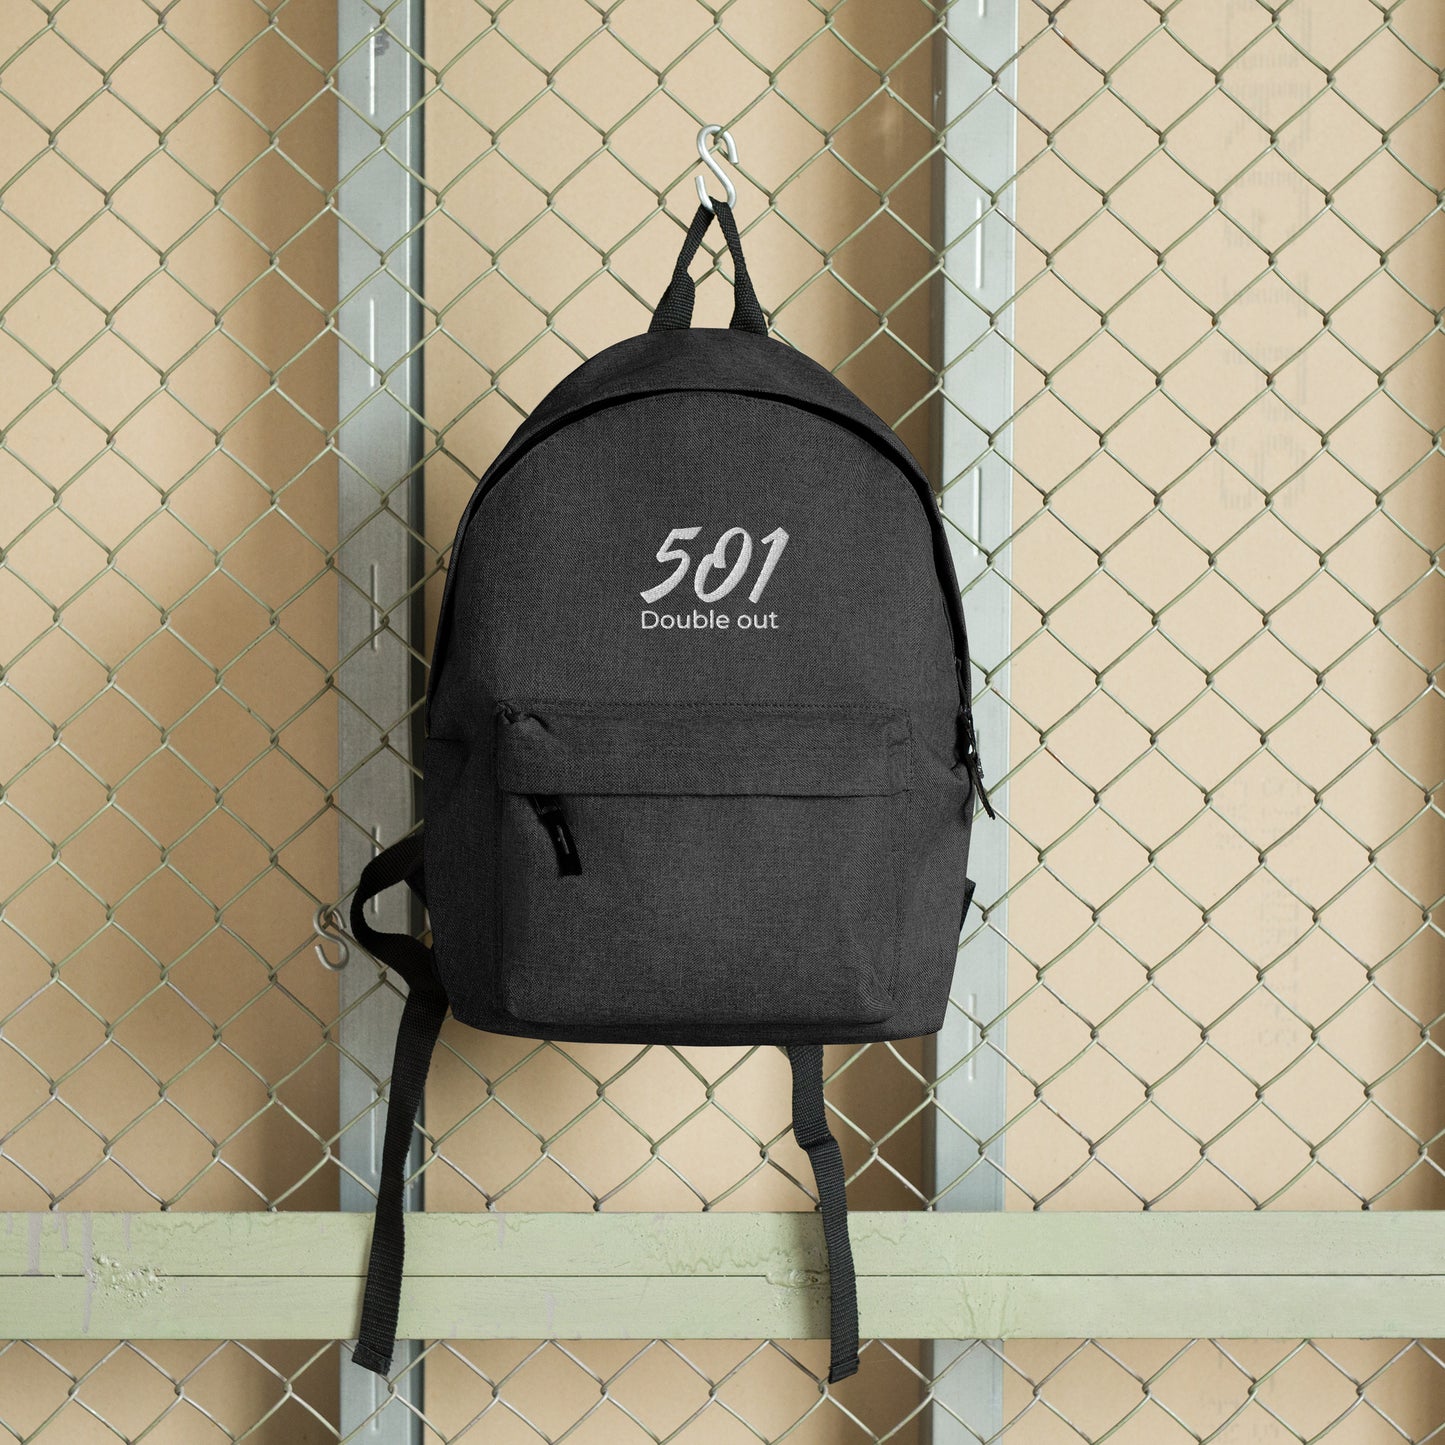 Bestickter Rucksack Backpack 501 DO